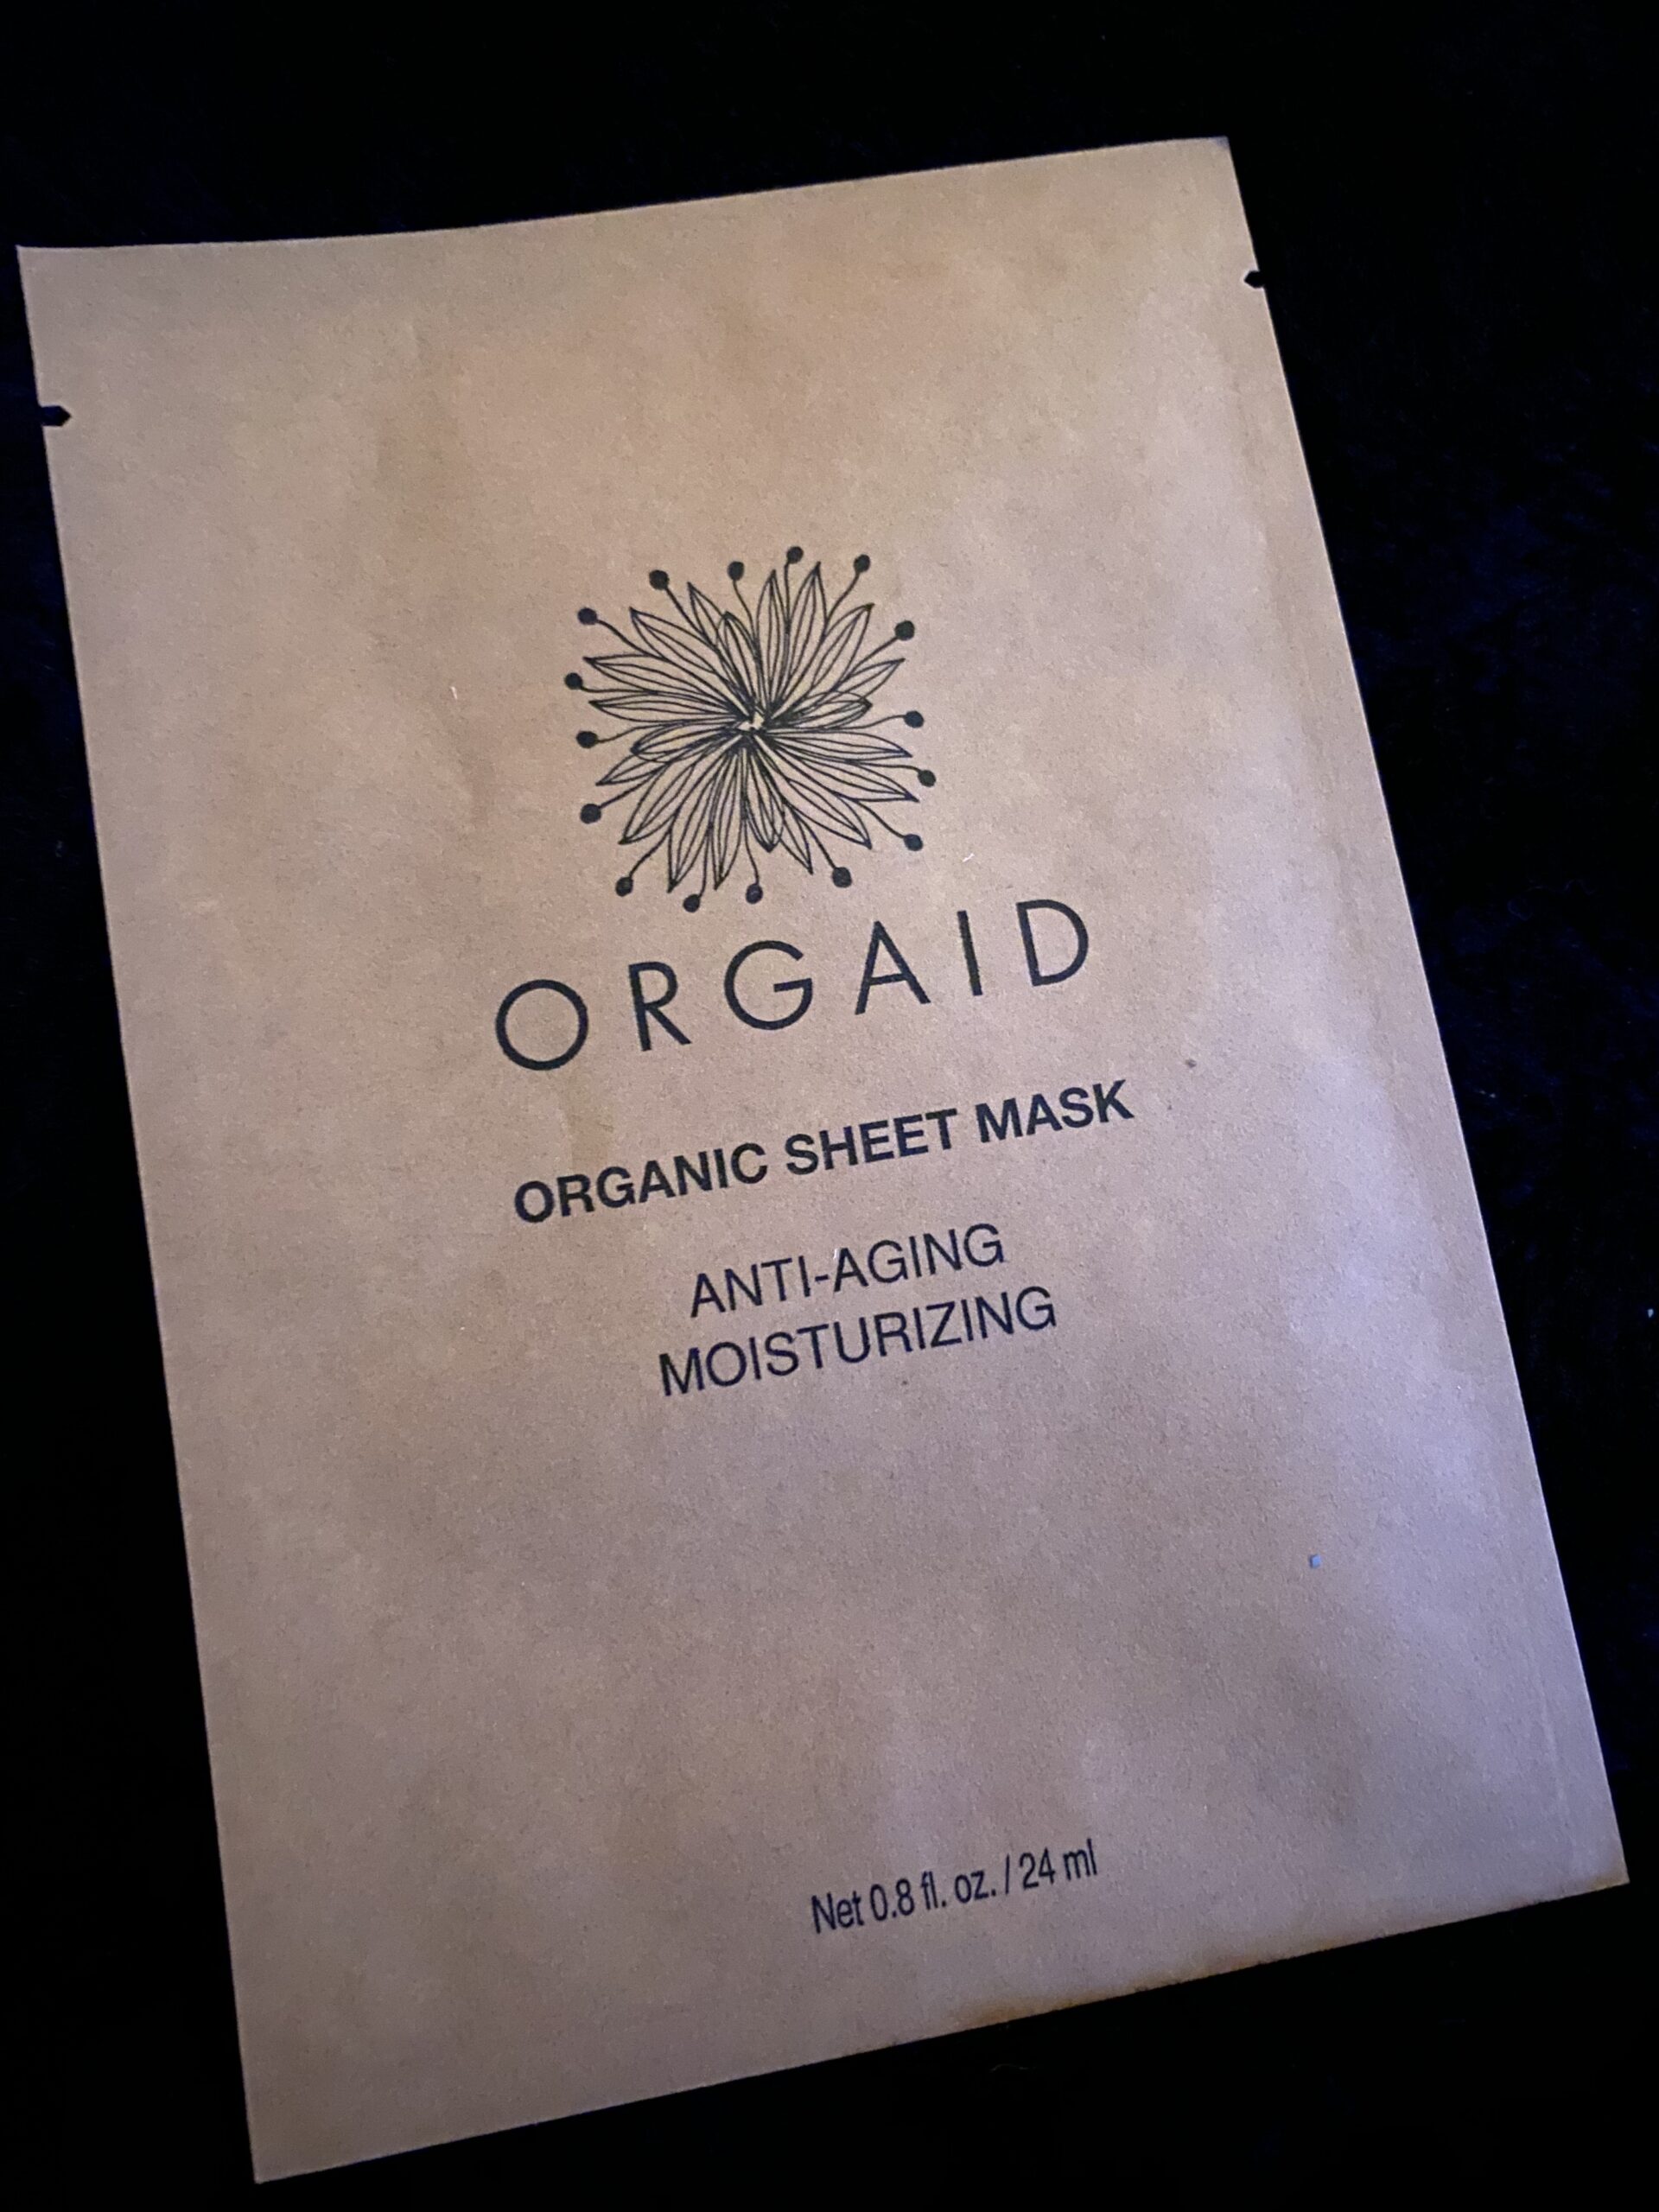 Orgaid anti aging moisturizing